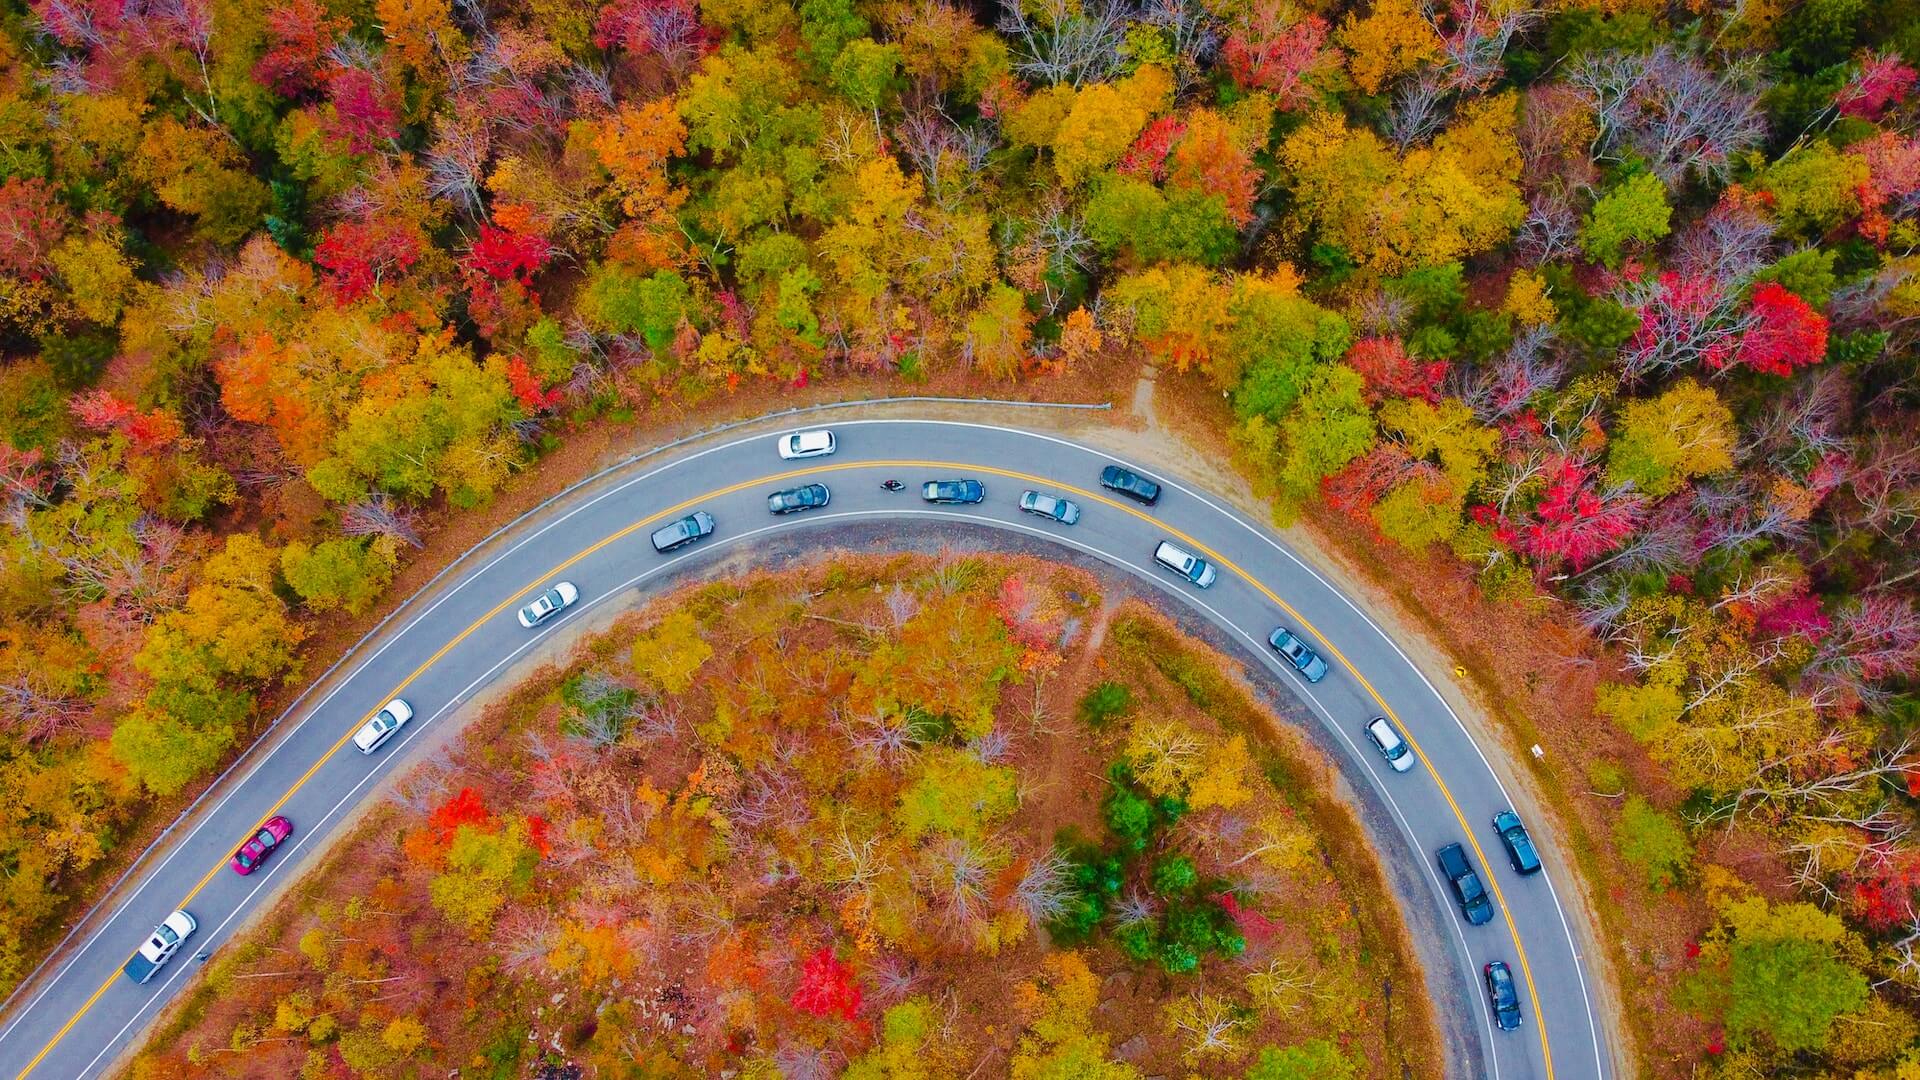 Cars driving, fall foliage